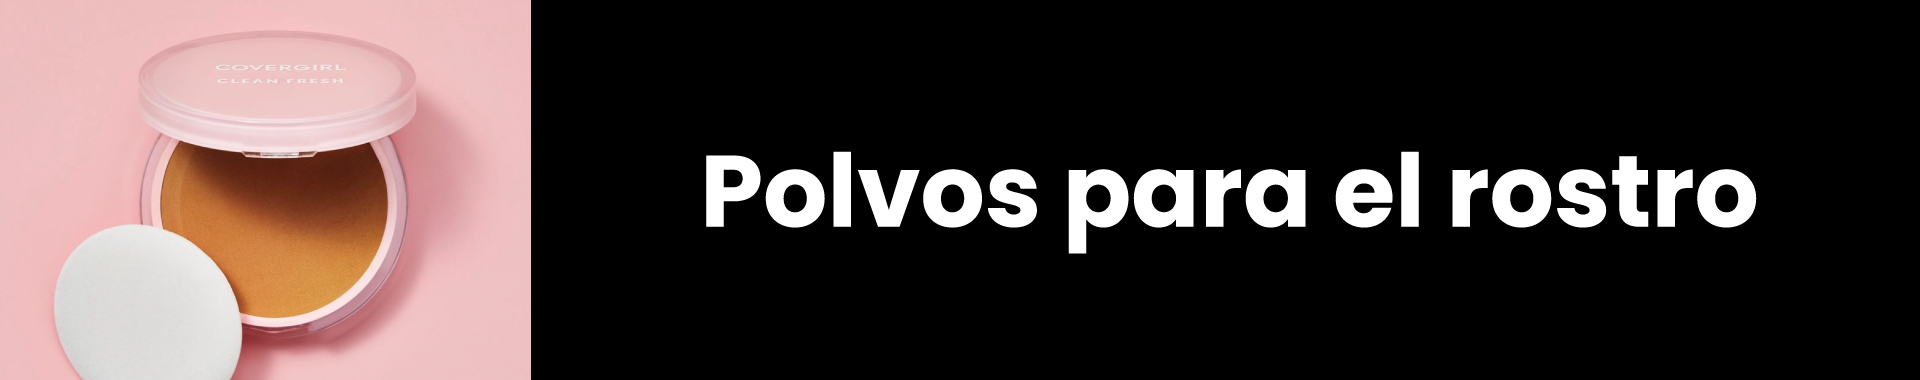 Banner polvos